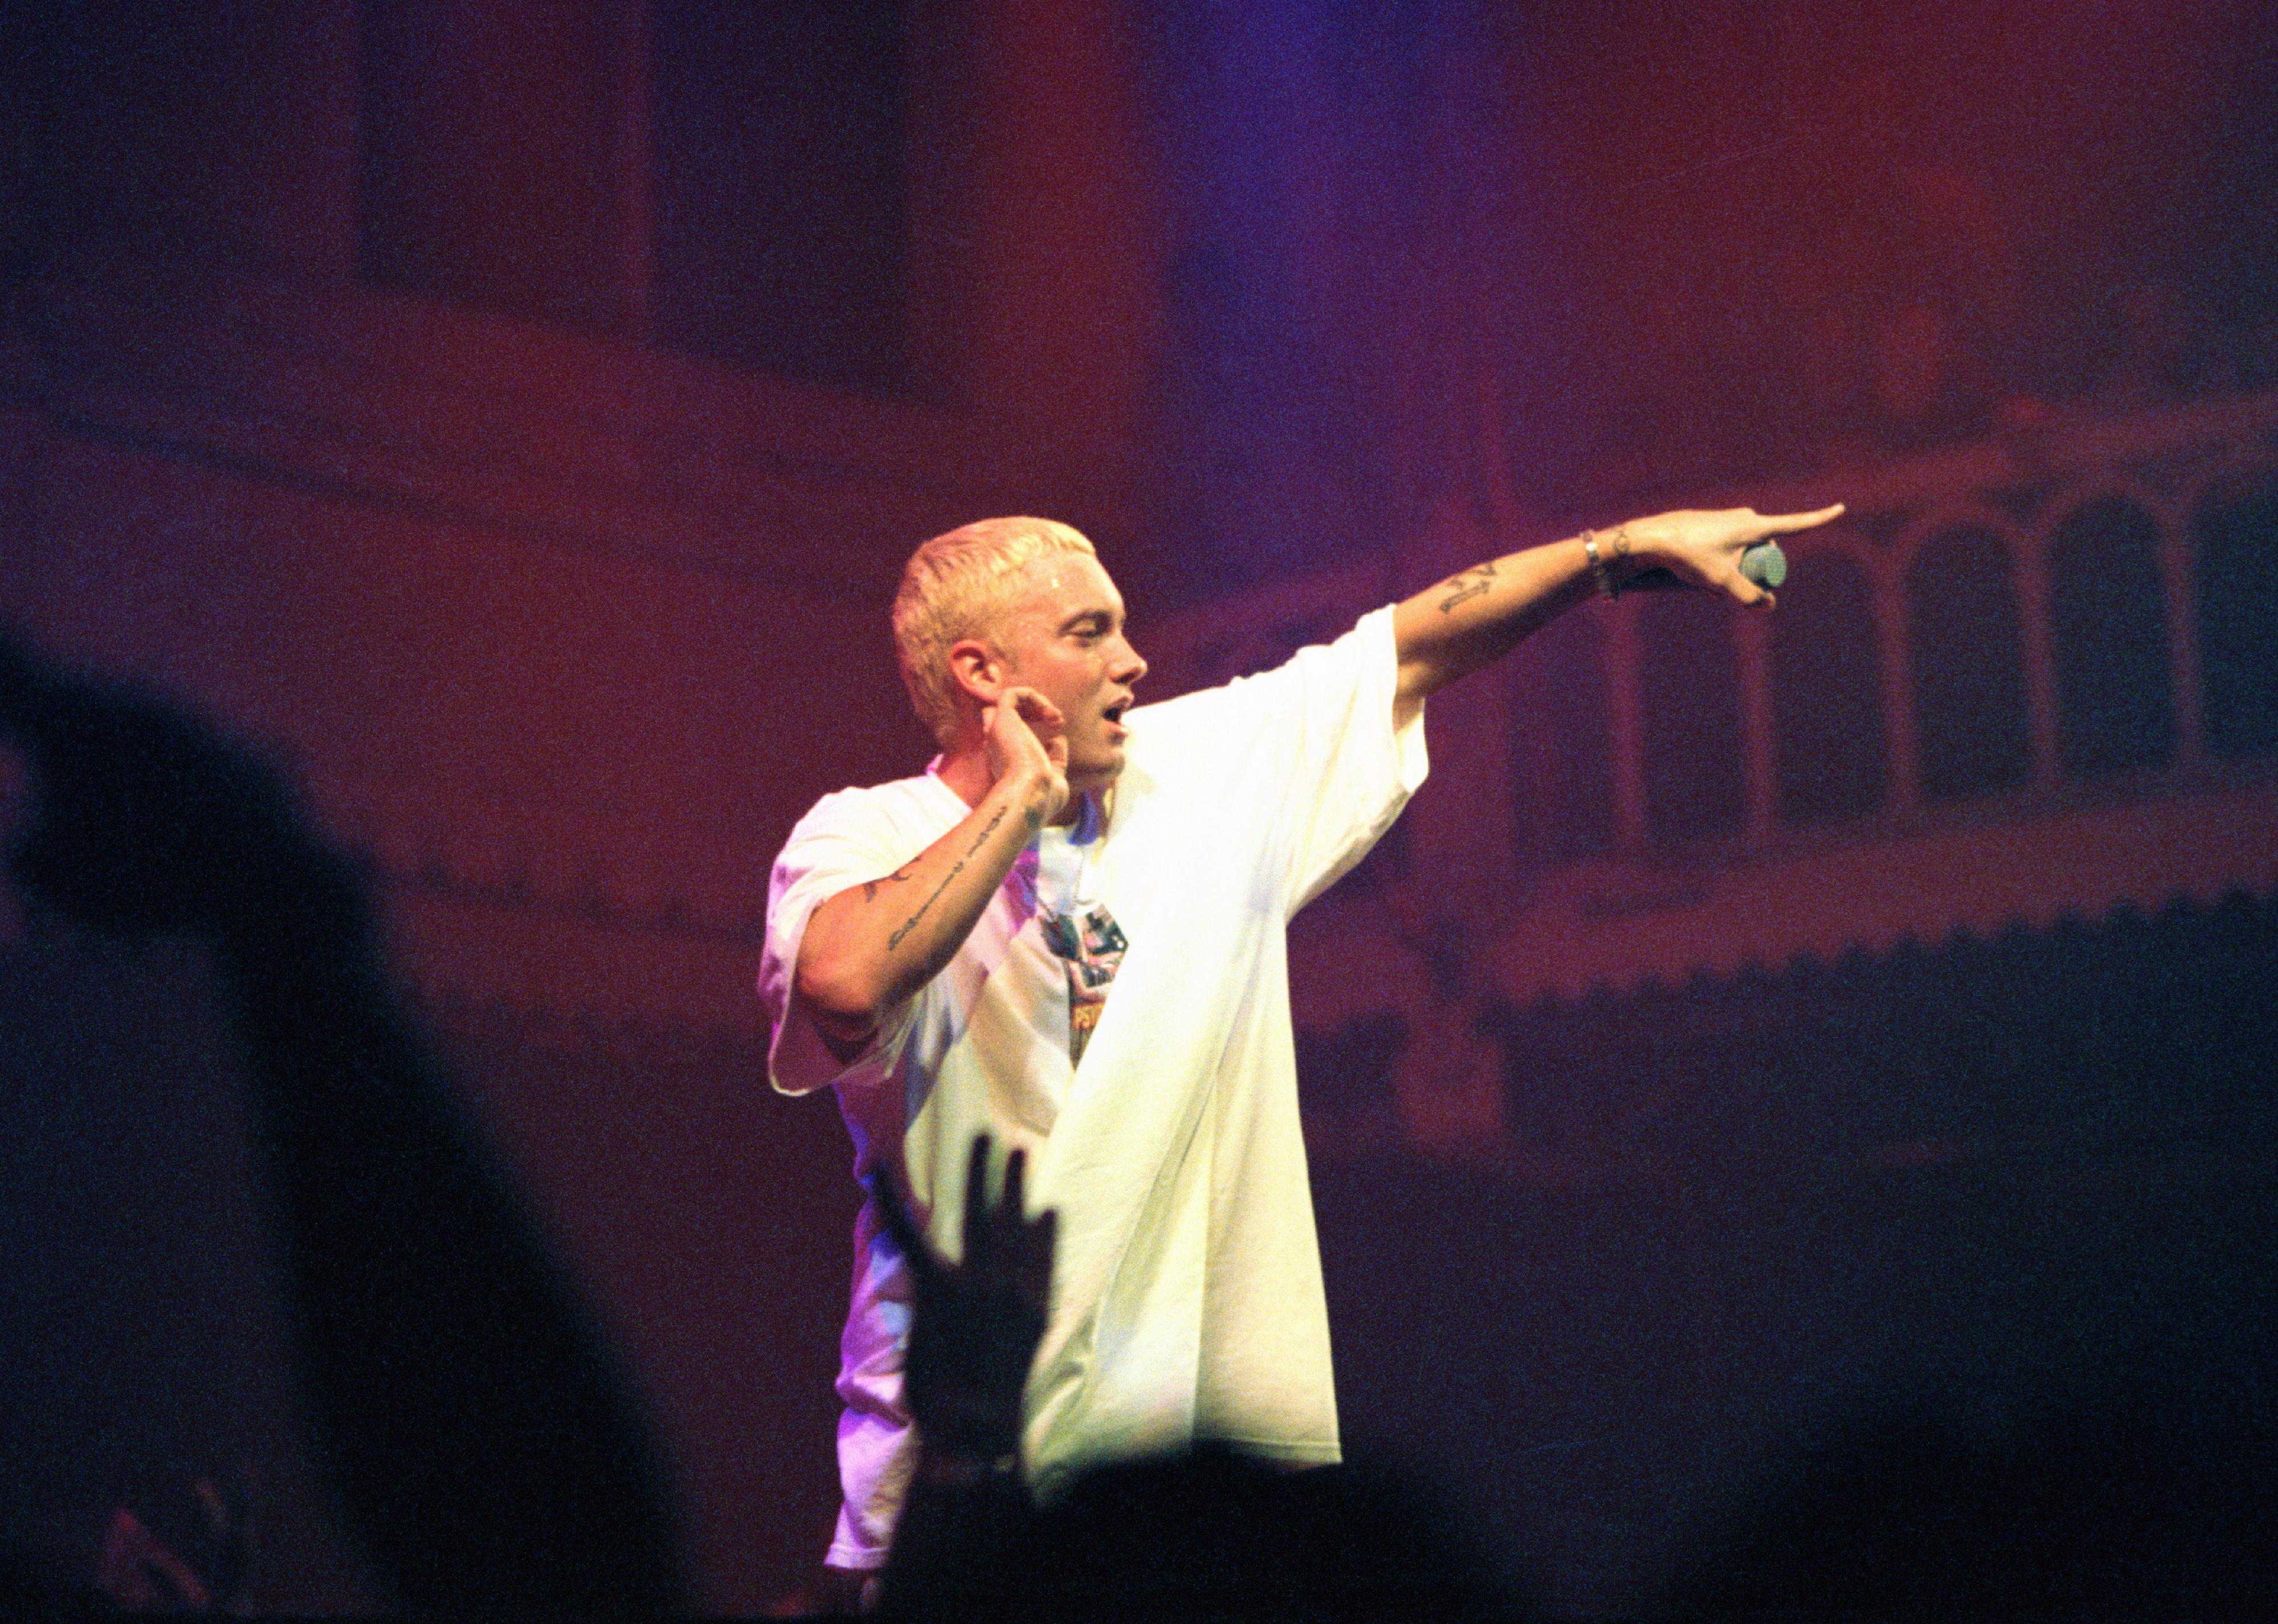 Eminem performs at a concert